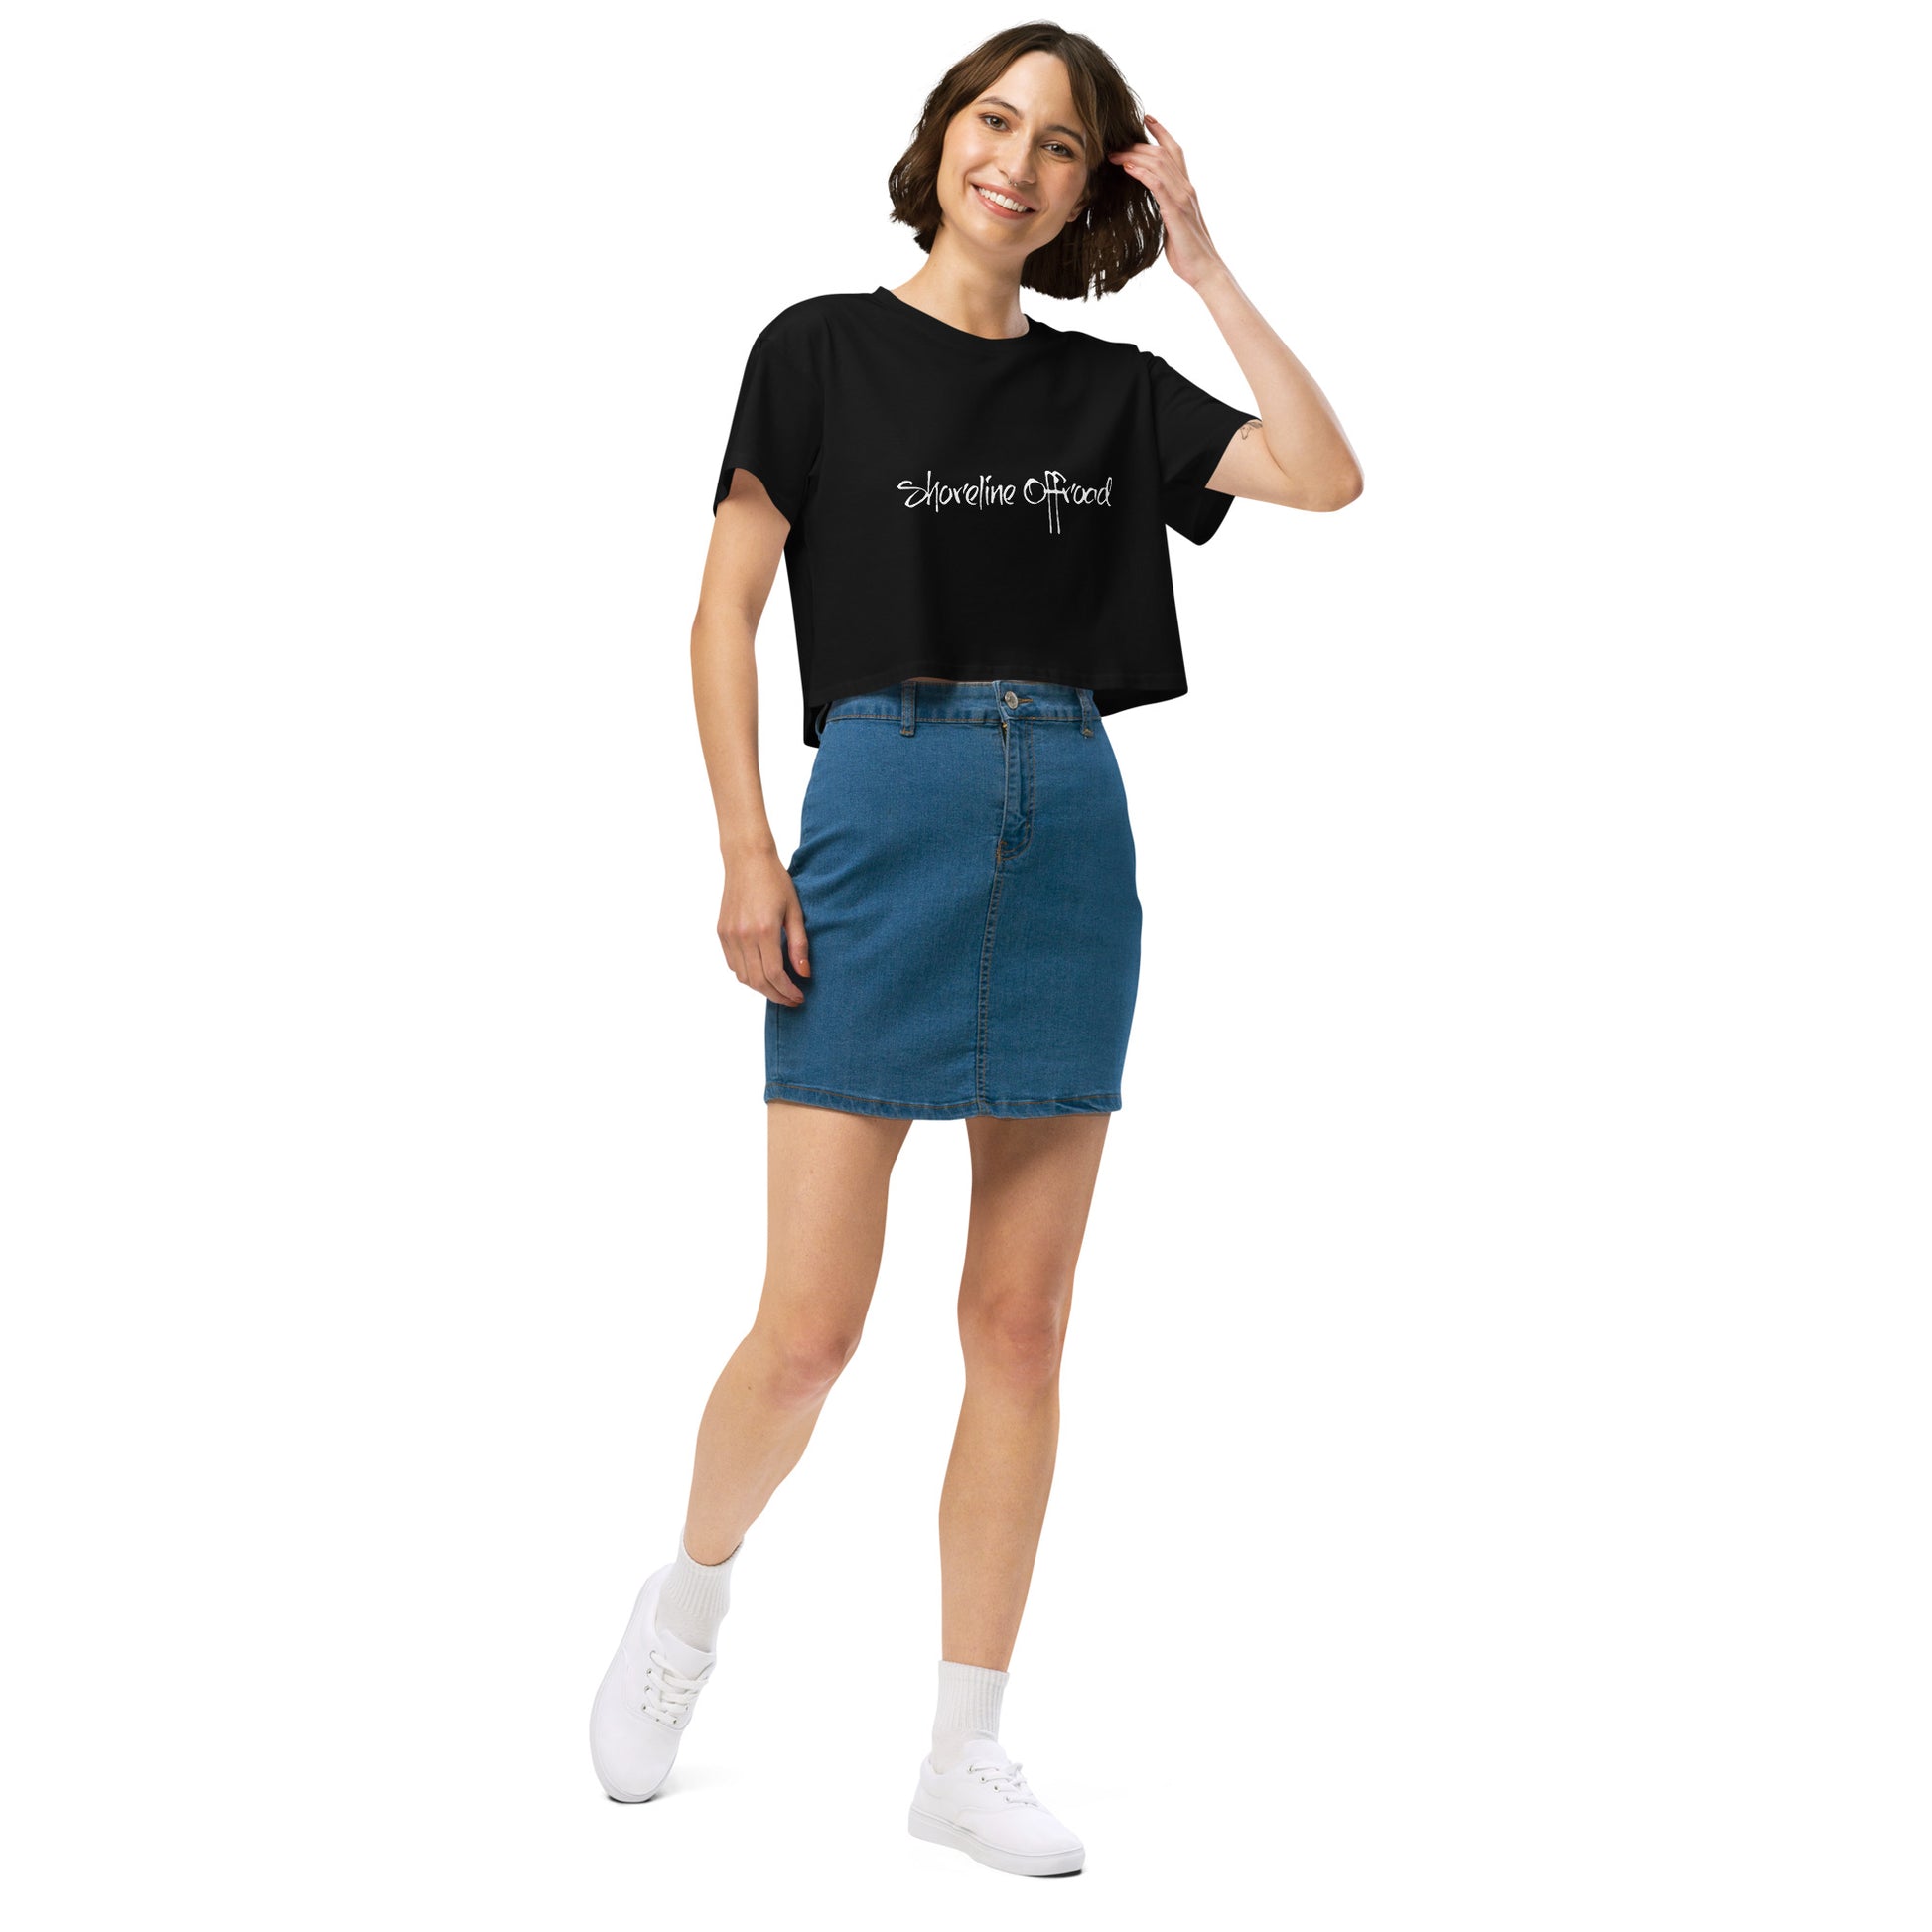 a woman wearing a black t - shirt and a denim skirt